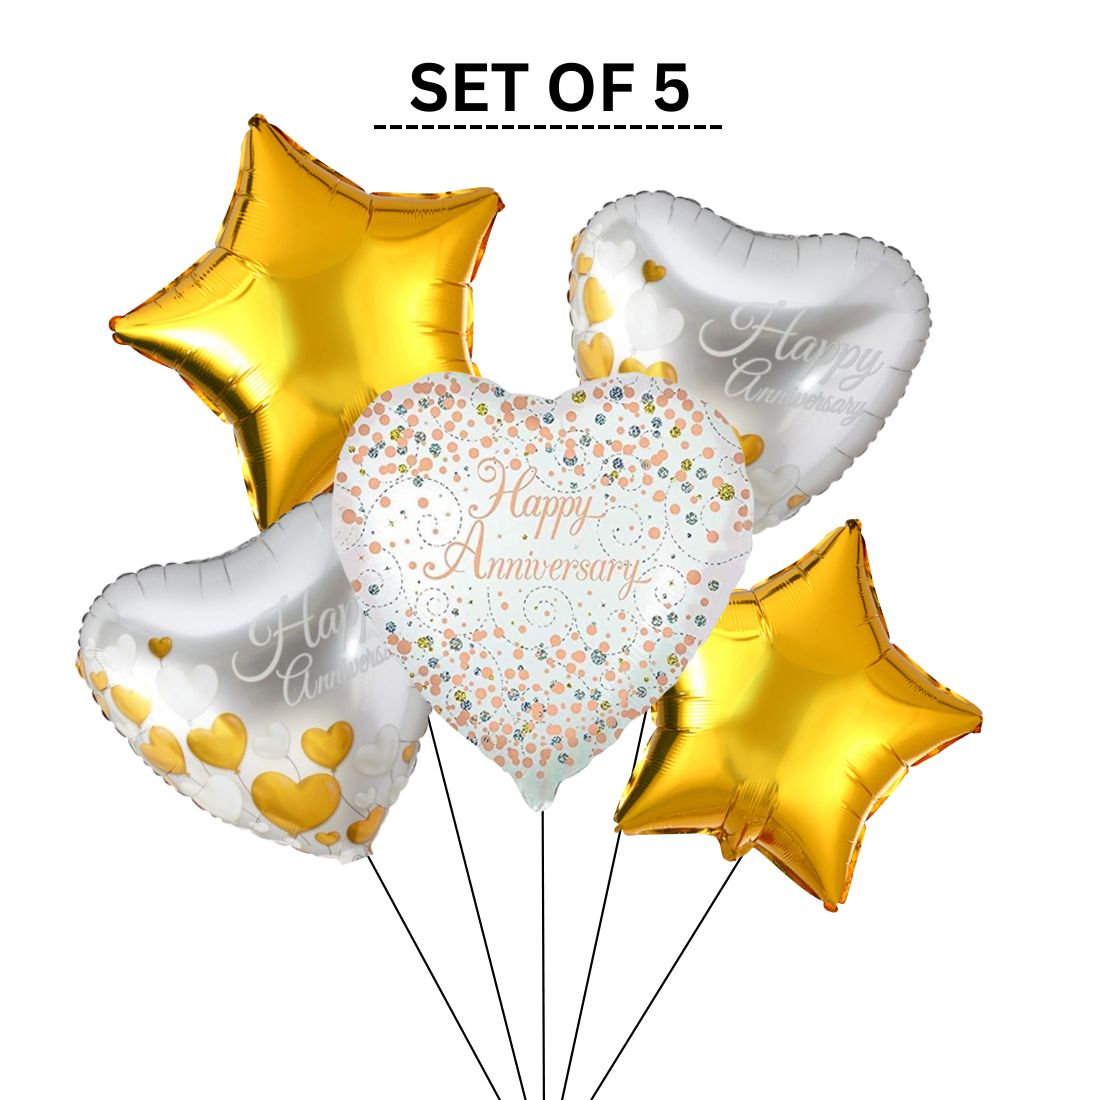 Happy Anniversary 5 pcs set Foil Balloon Party Decoration